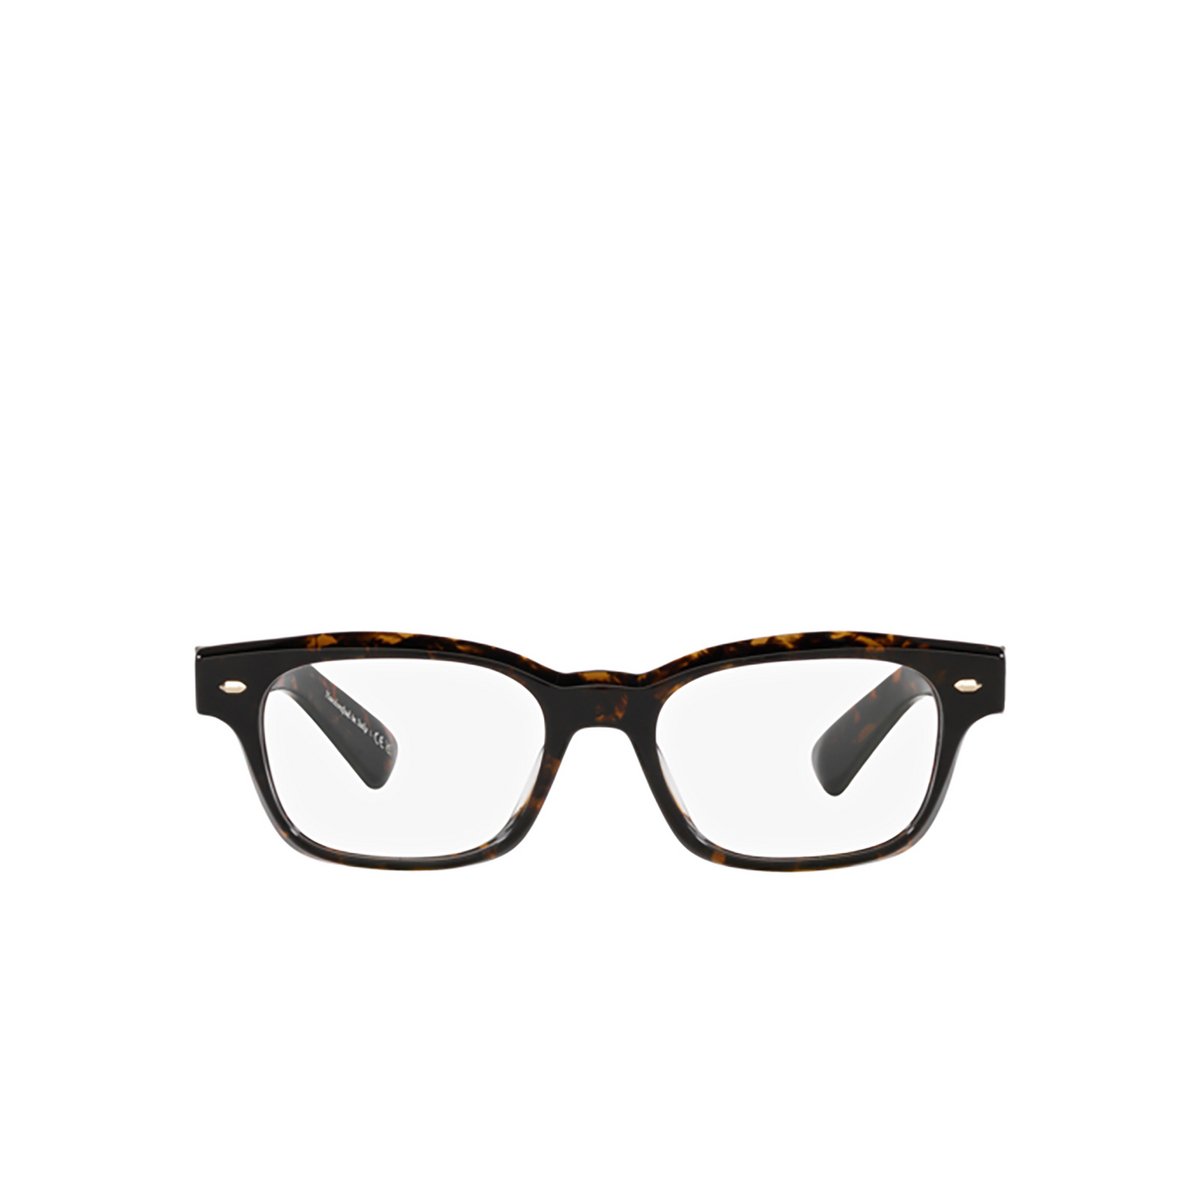 Oliver Peoples LATIMORE Eyeglasses 1747 Walnut Tortoise - front view